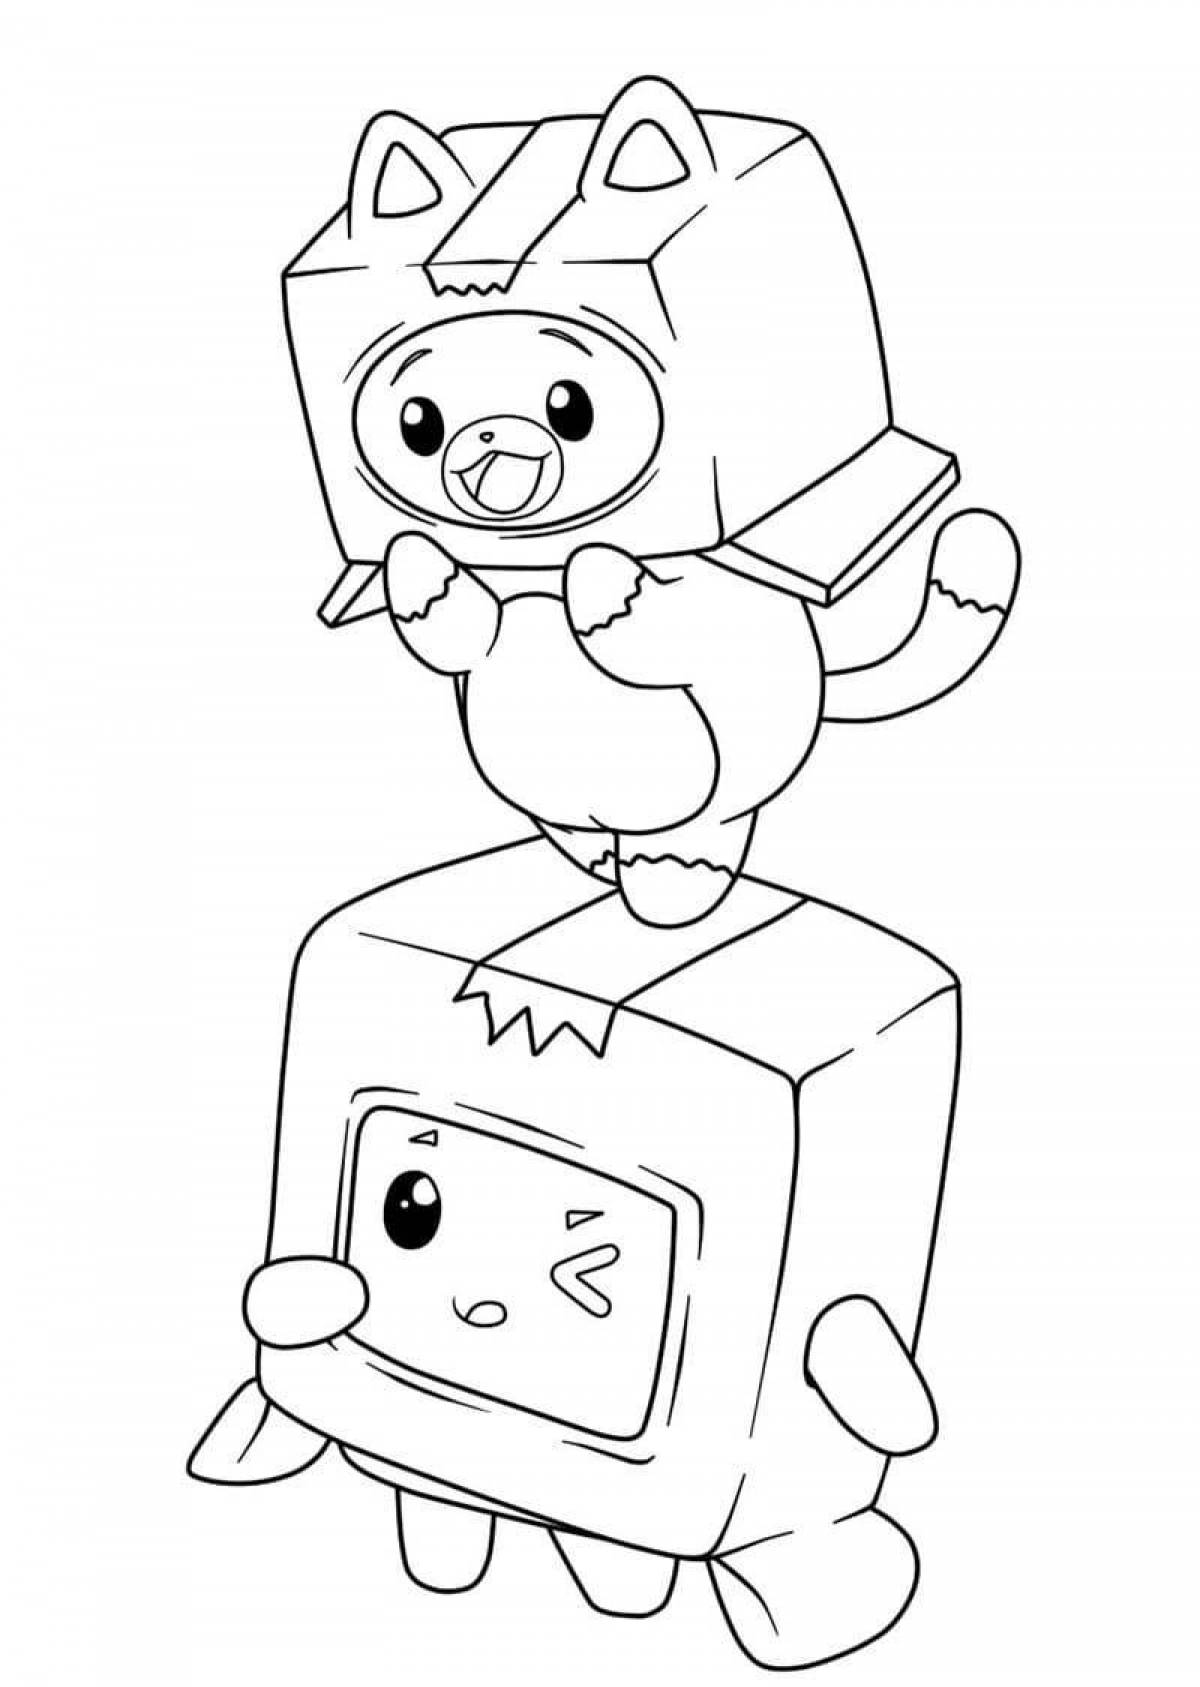 Joyful drawing of boxy boo